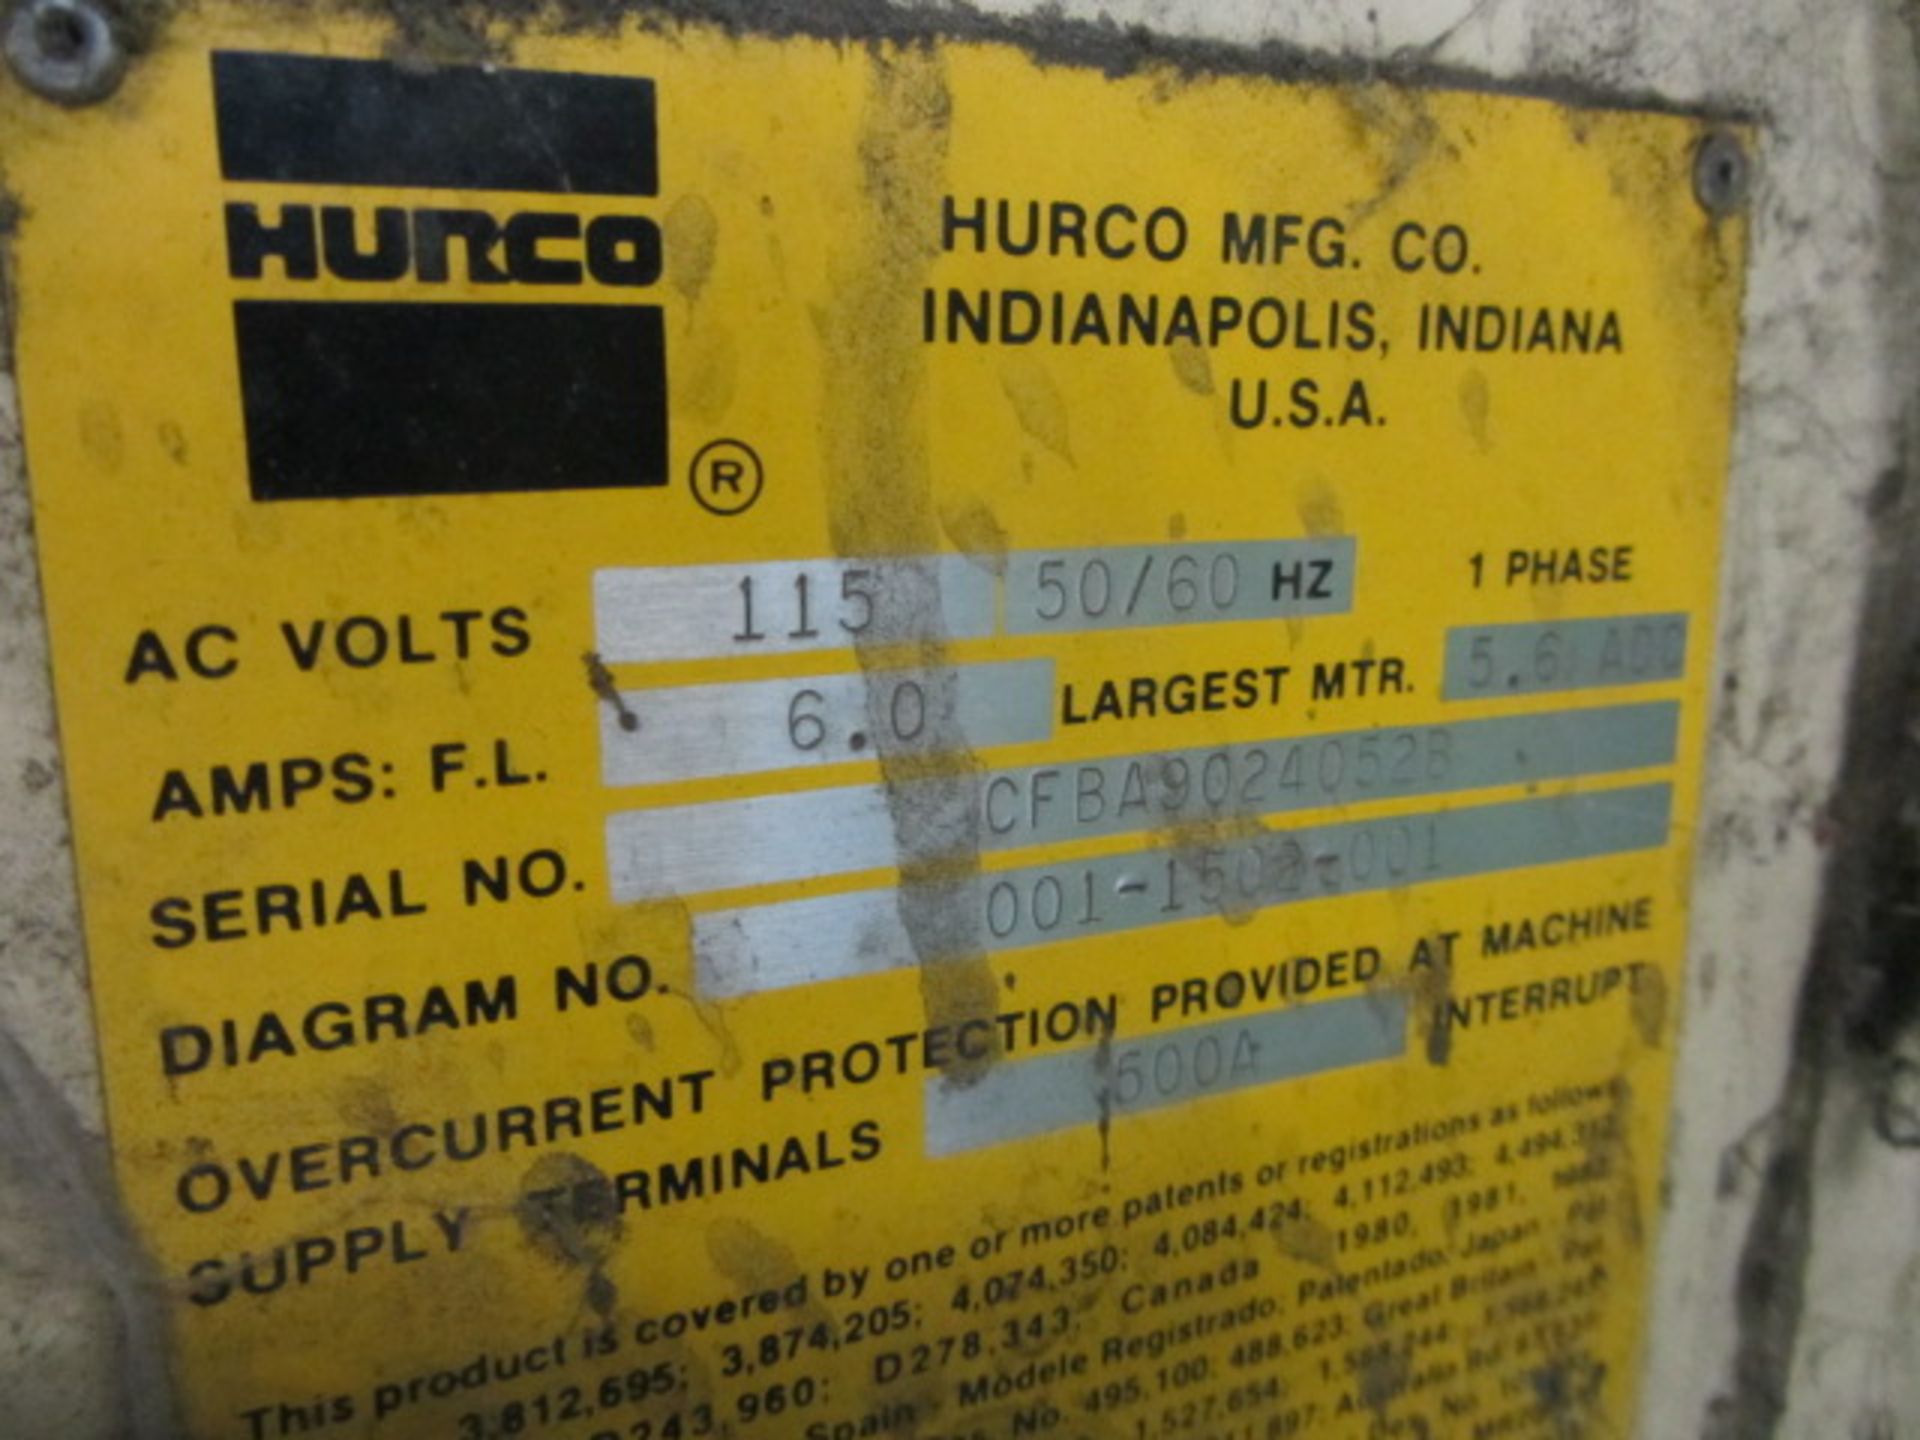 Chicago Dreis & Krump 180 Ton x 12' Mechanical Press Brake with 10-1/2' Between Housings, Hurco - Image 7 of 7